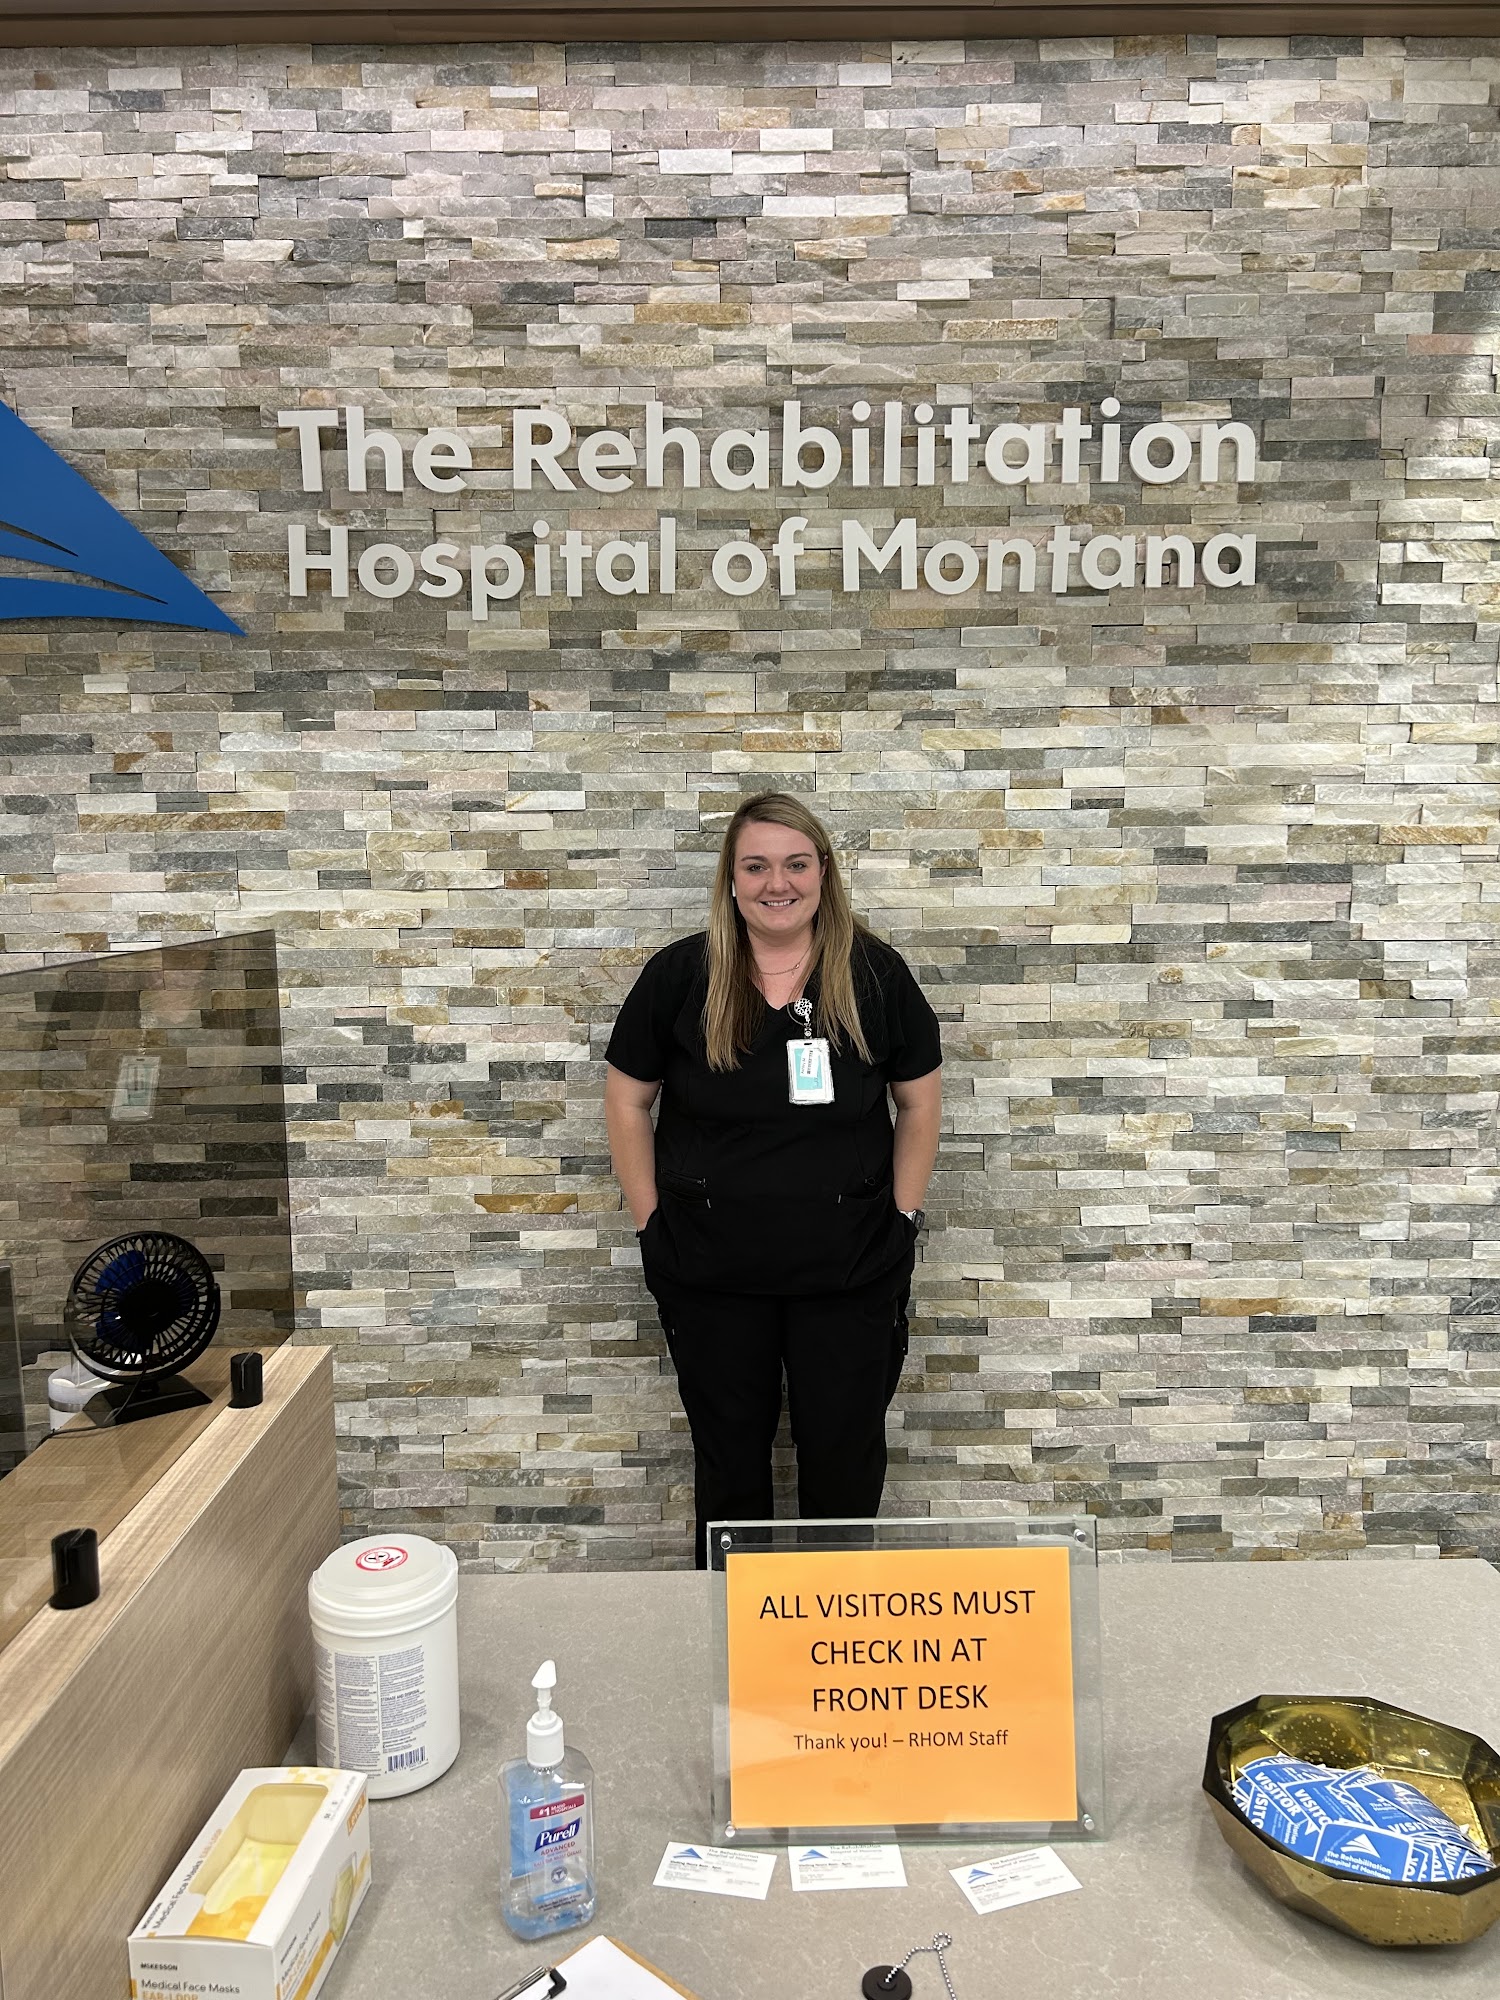 The Rehabilitation Hospital of Montana